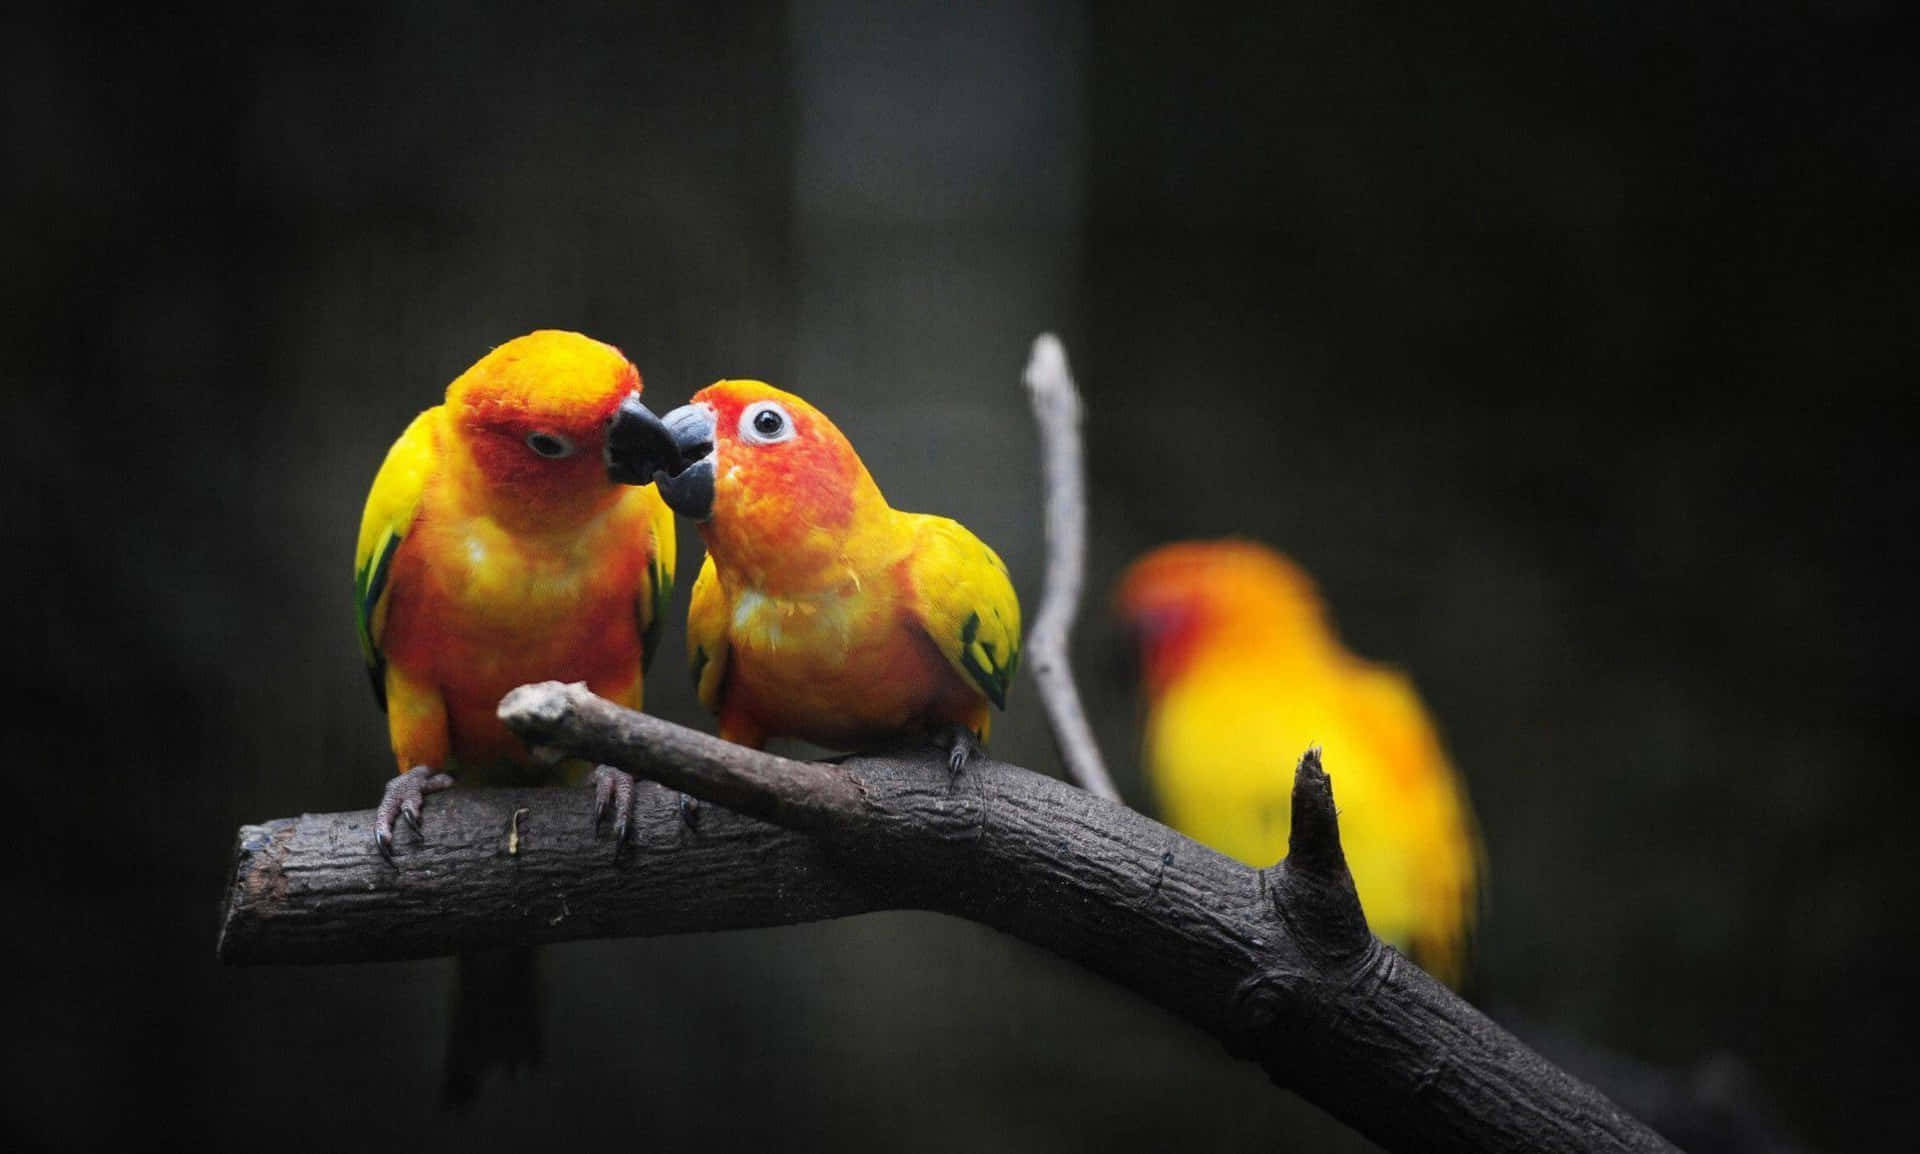 Two love birds in an embrace